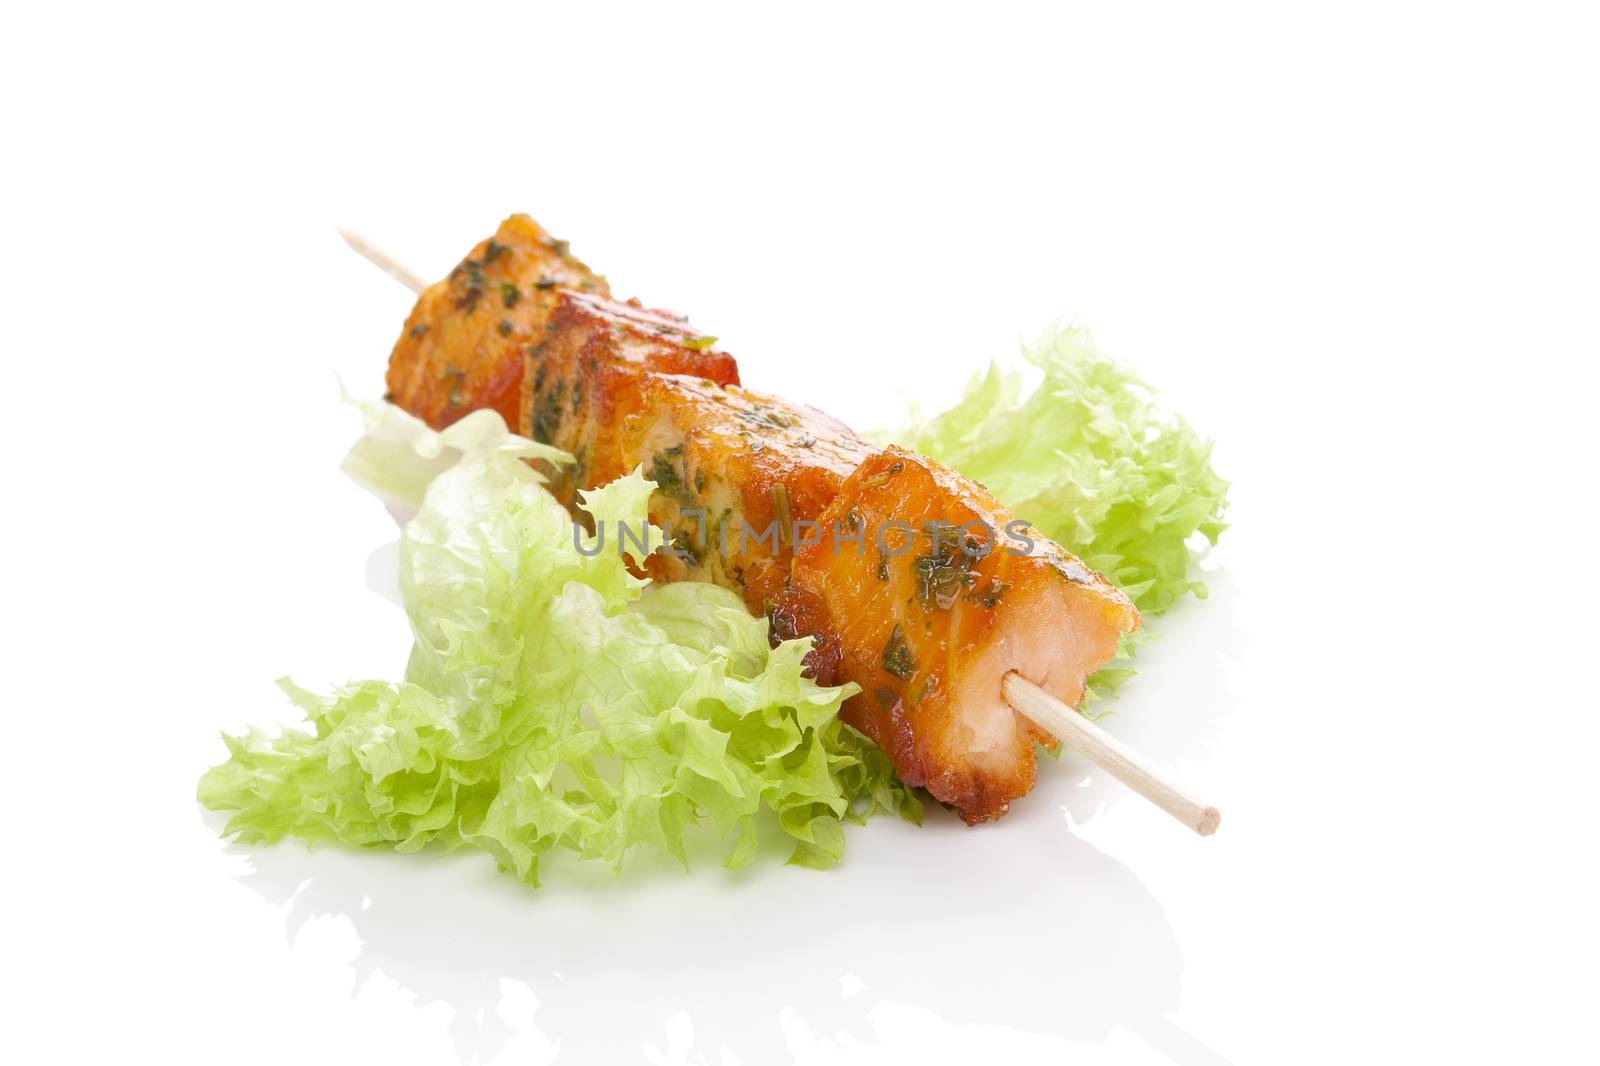 Salmon kebab and green salad. by eskymaks